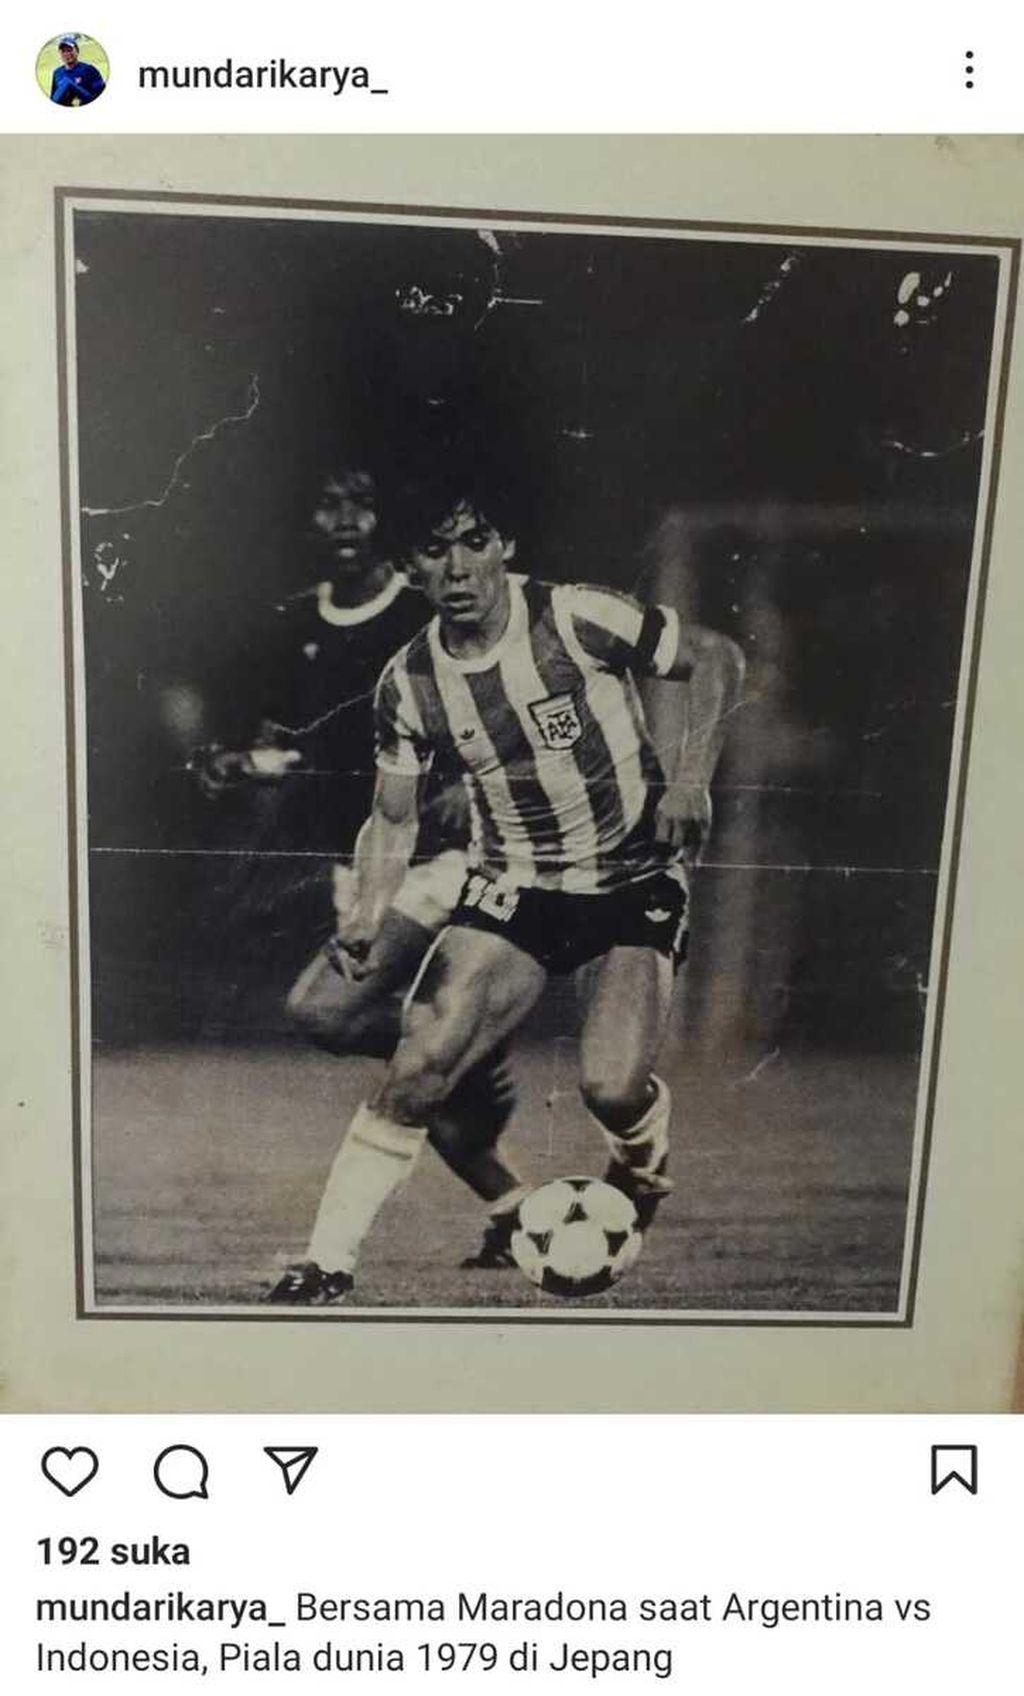 Foto dokumentasi mantan pemain tim Indonesia U-20 Mundari Karya (belakang) saat dilewati pemain Argentina U-20 Diego Armando Maradona pada laga Kejuaraan Dunia Remaja FIFA di Tokyo, Jepang, pada 1979. Indonesia kalah 0-5 pada laga itu.